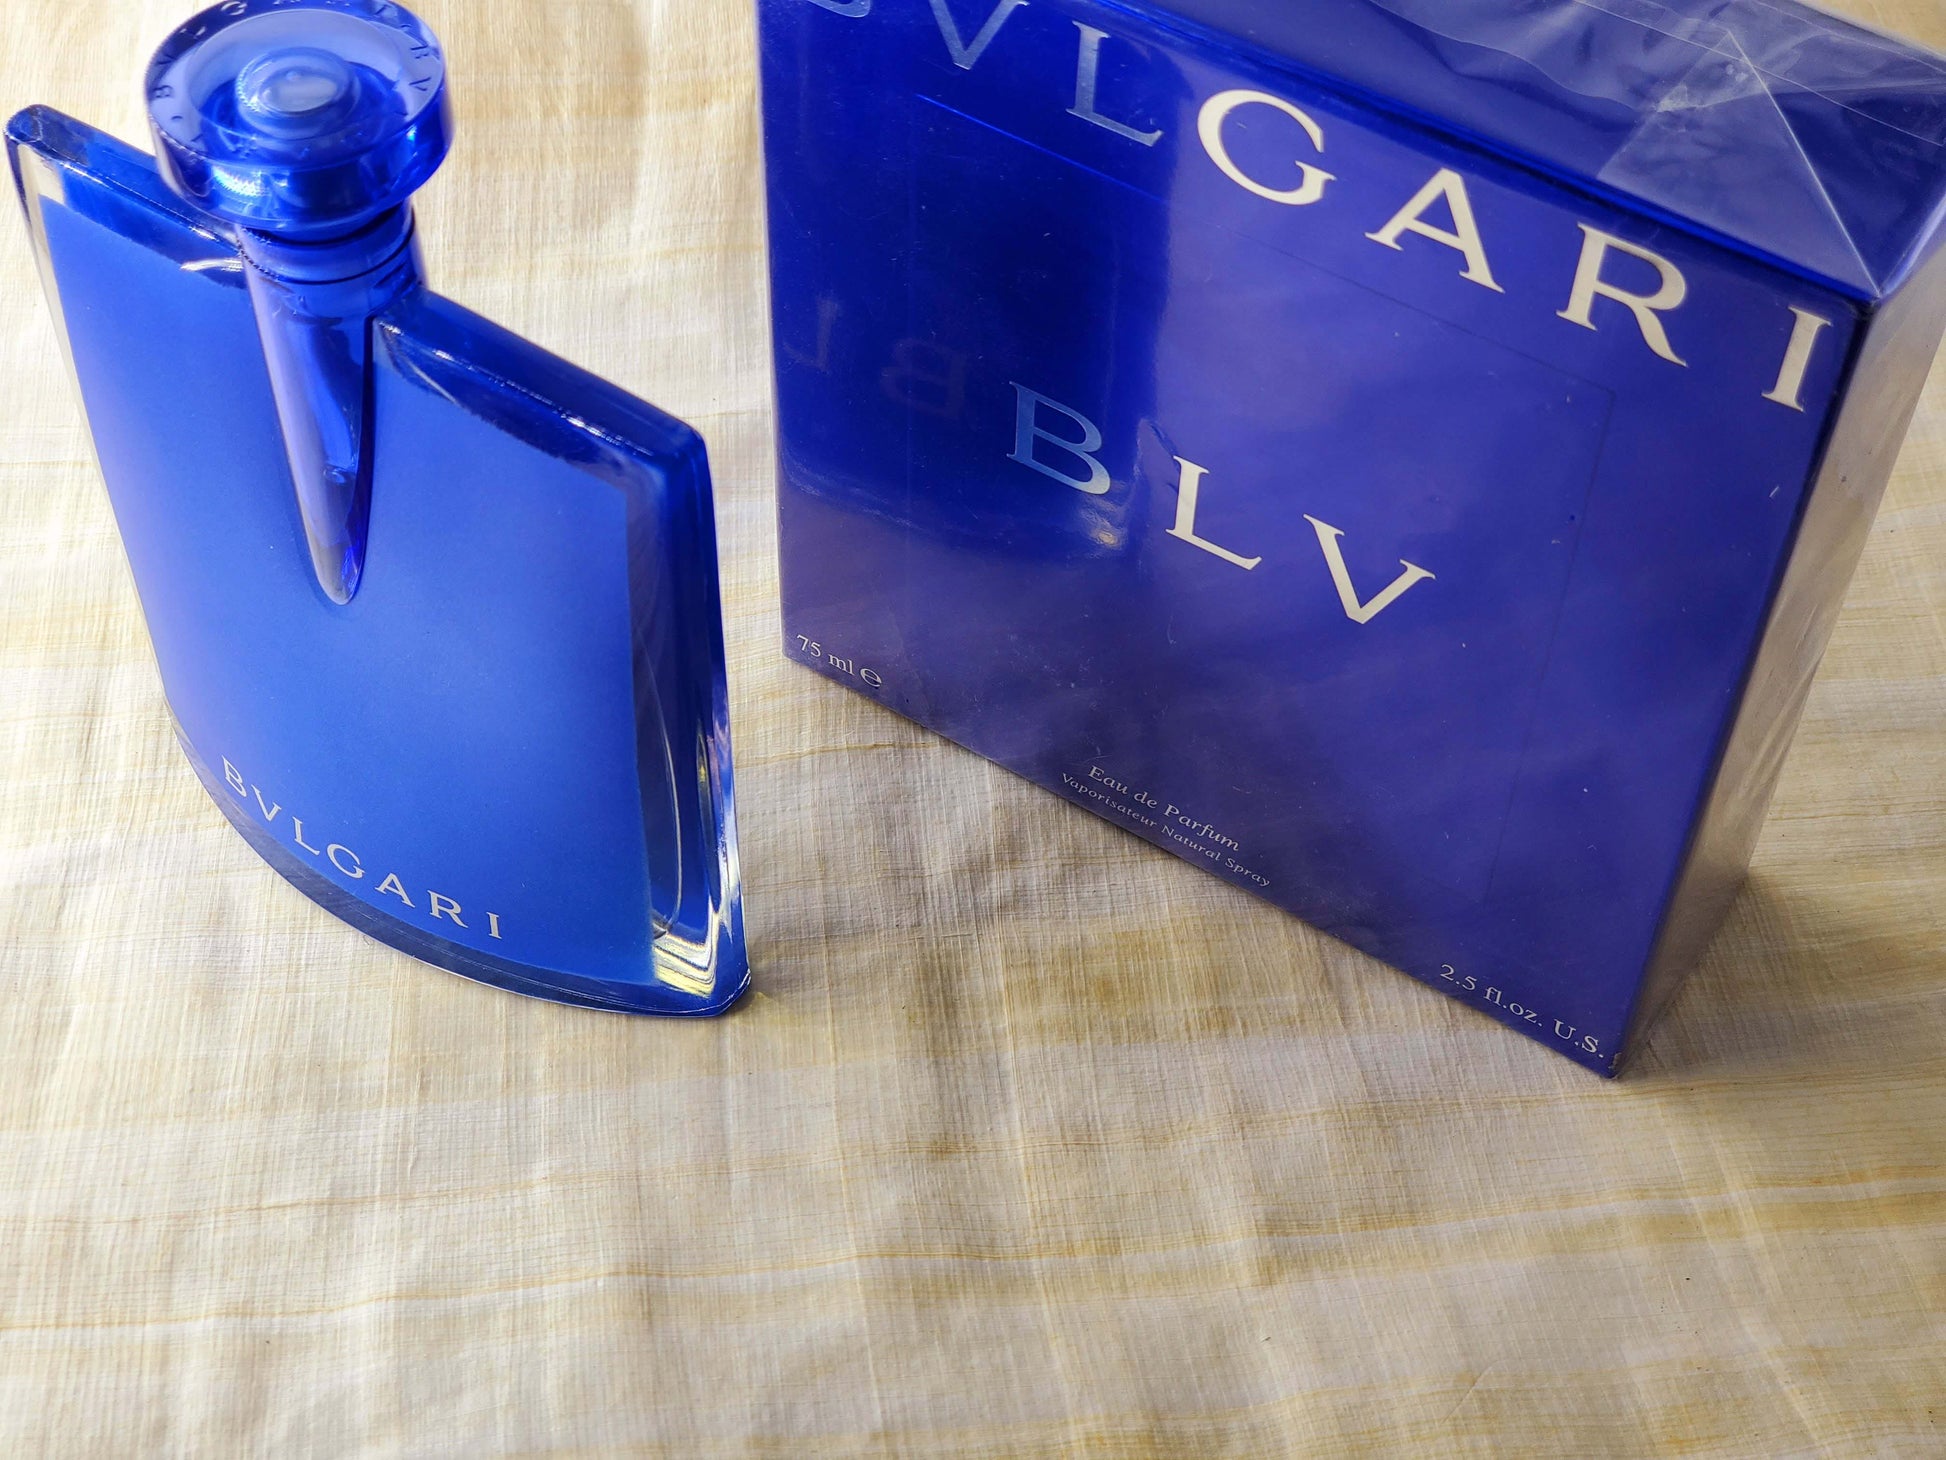 BLV Bvlgari perfume - a fragrance for women 2000